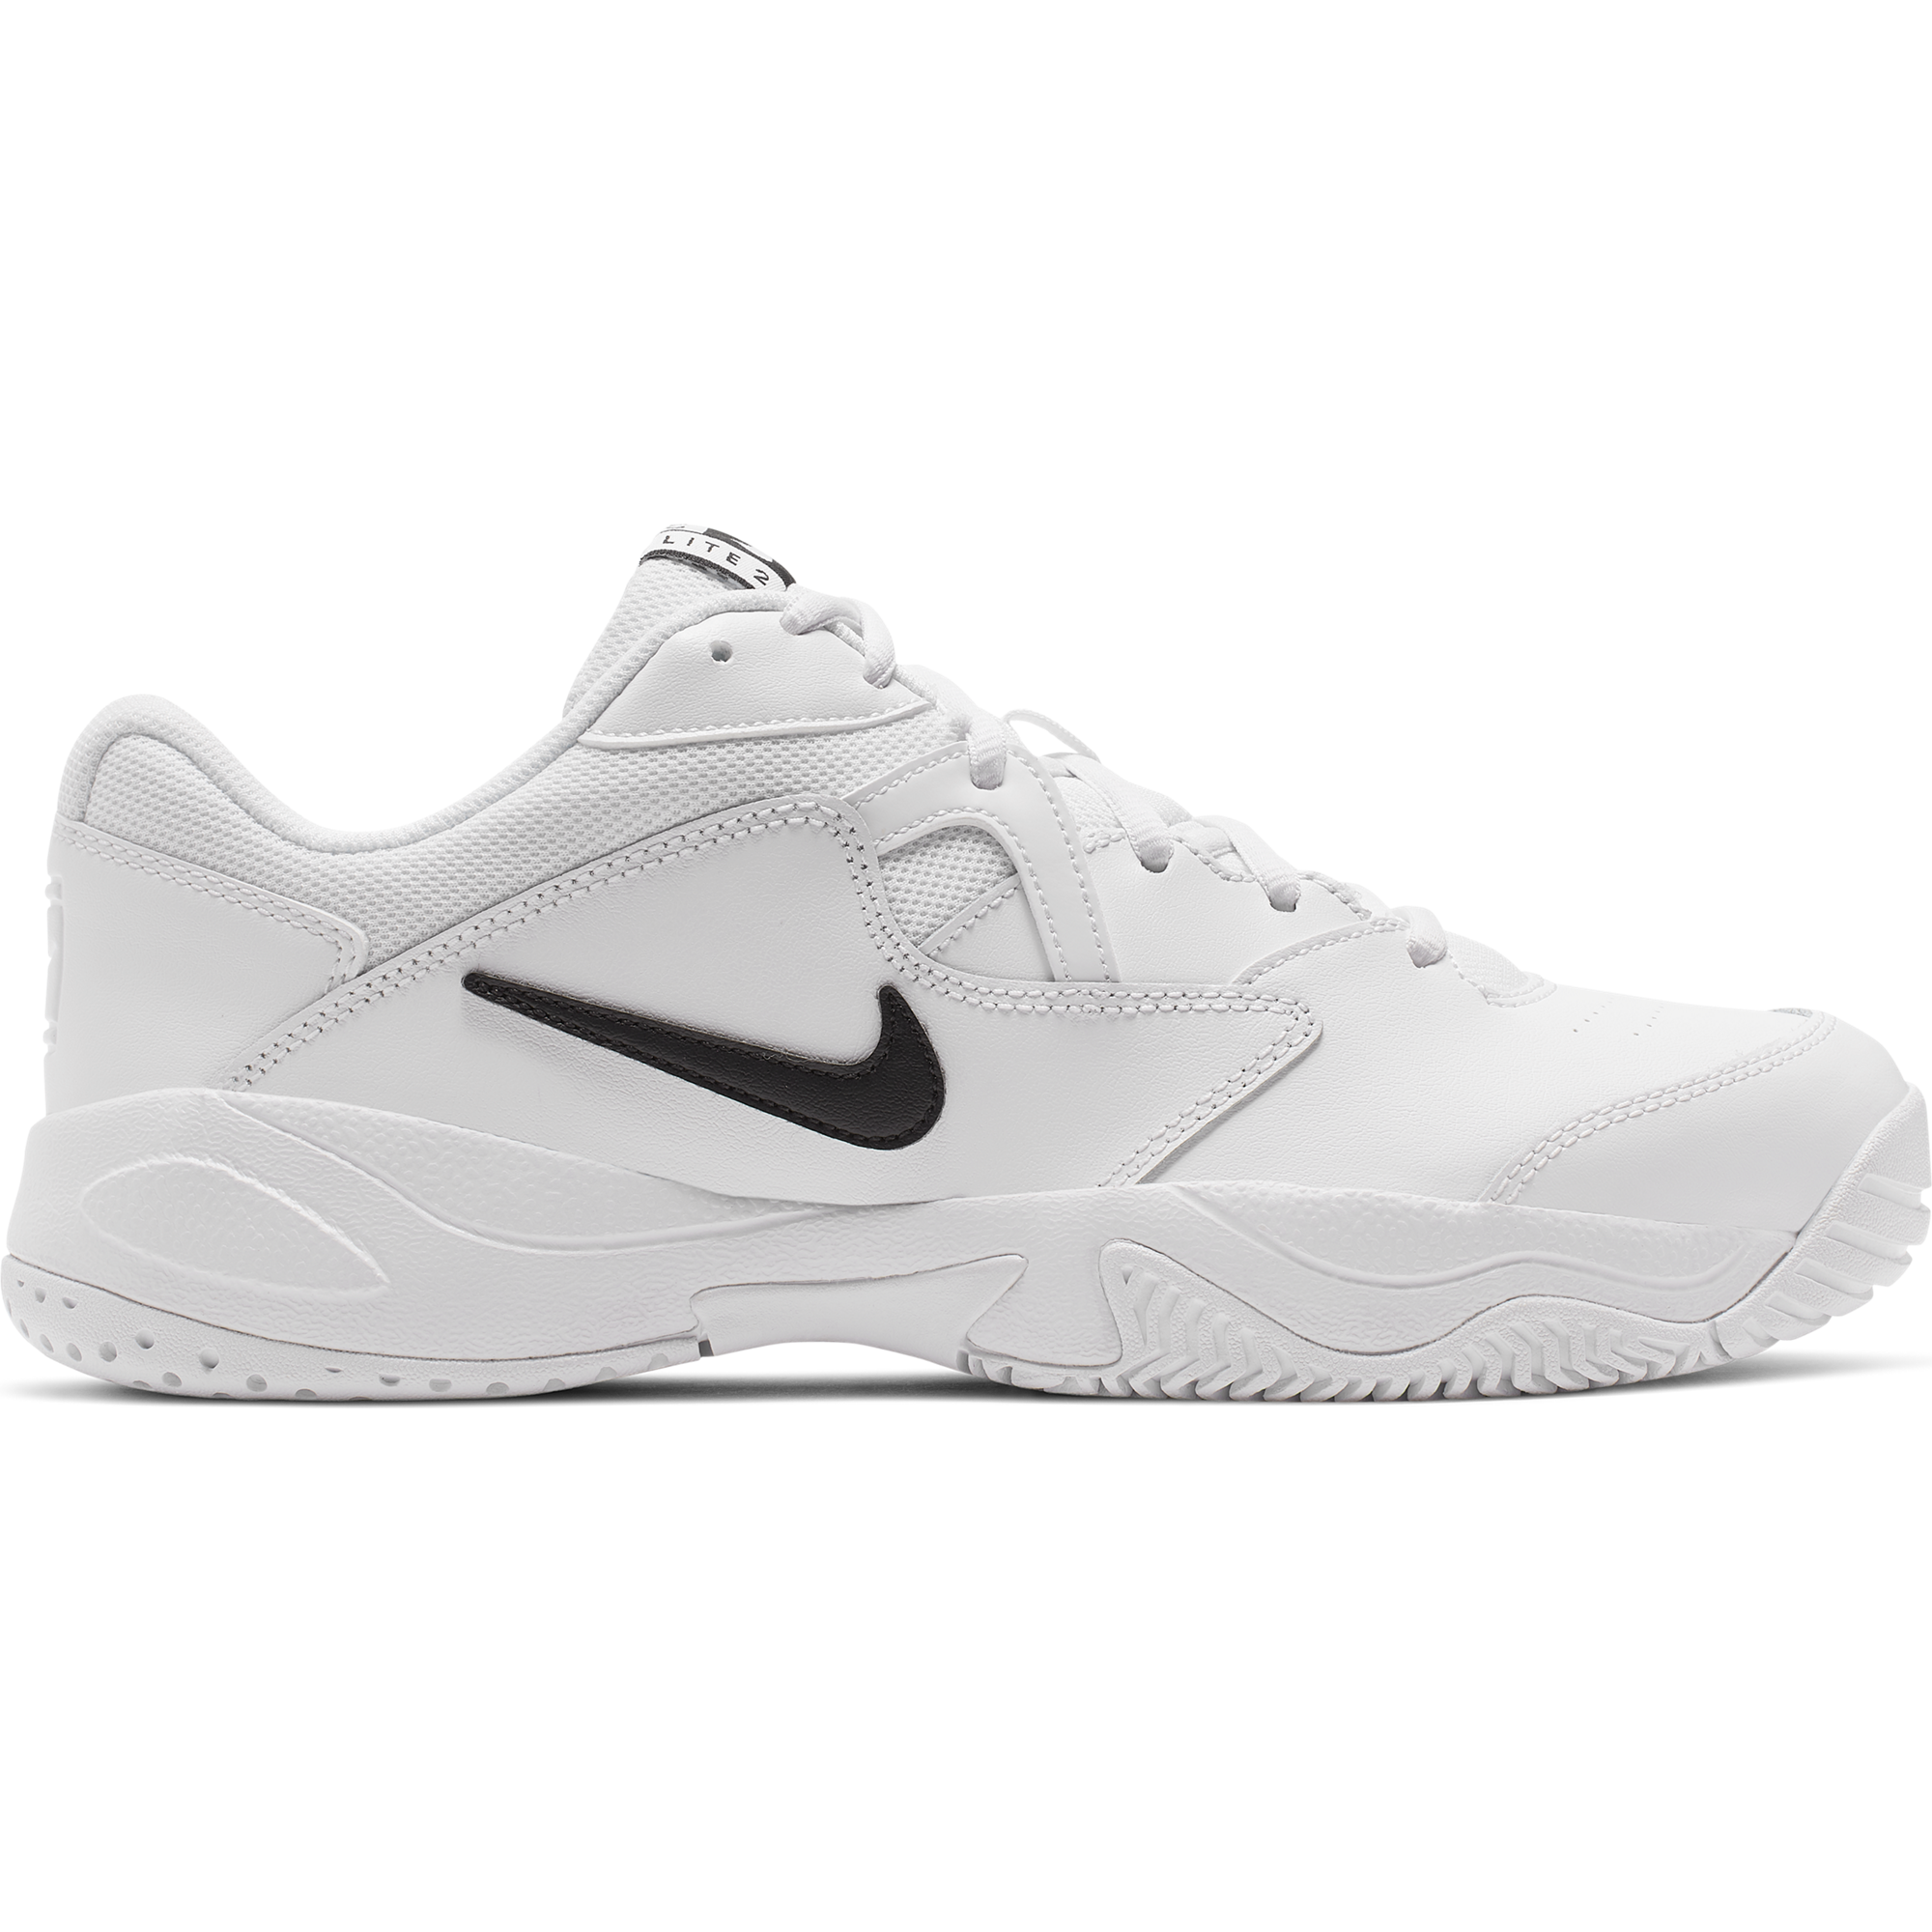 NikeCourt Lite 2 Men's Hard Court Tennis Shoe - White/Black | TOUR Superstore